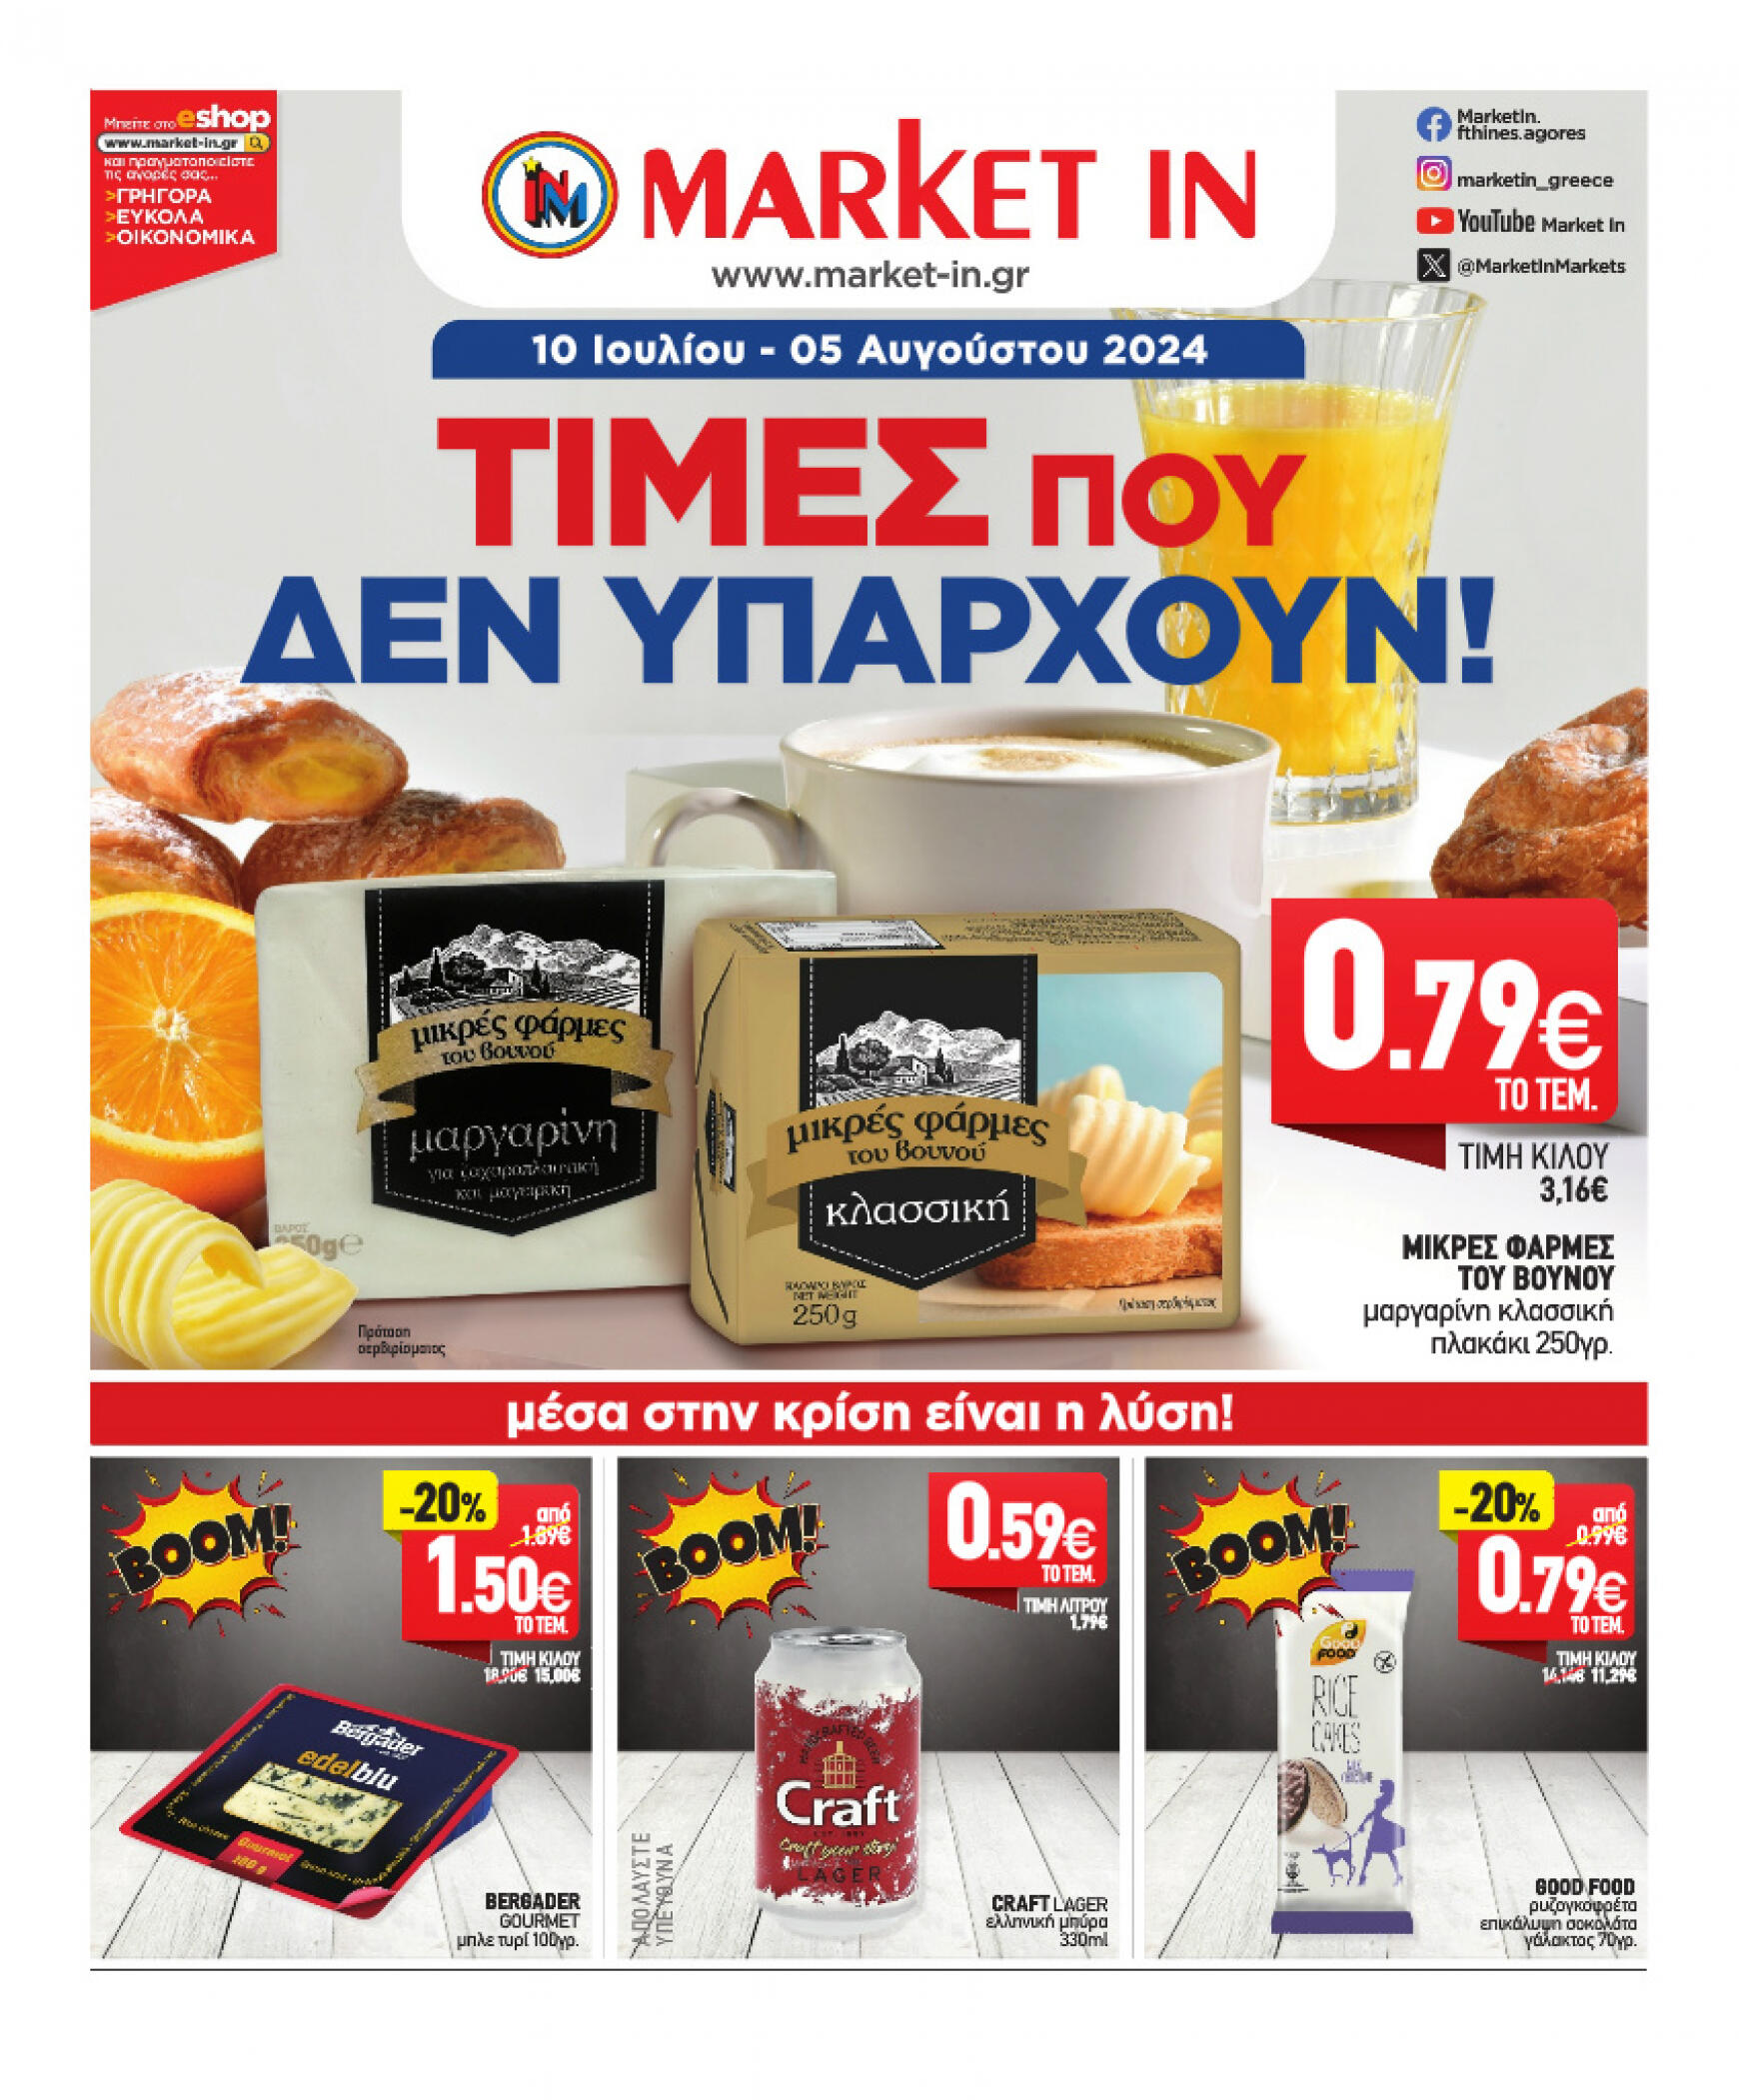 market-in - Market In φυλλάδιο ρεύματος 10/07 - 05/08